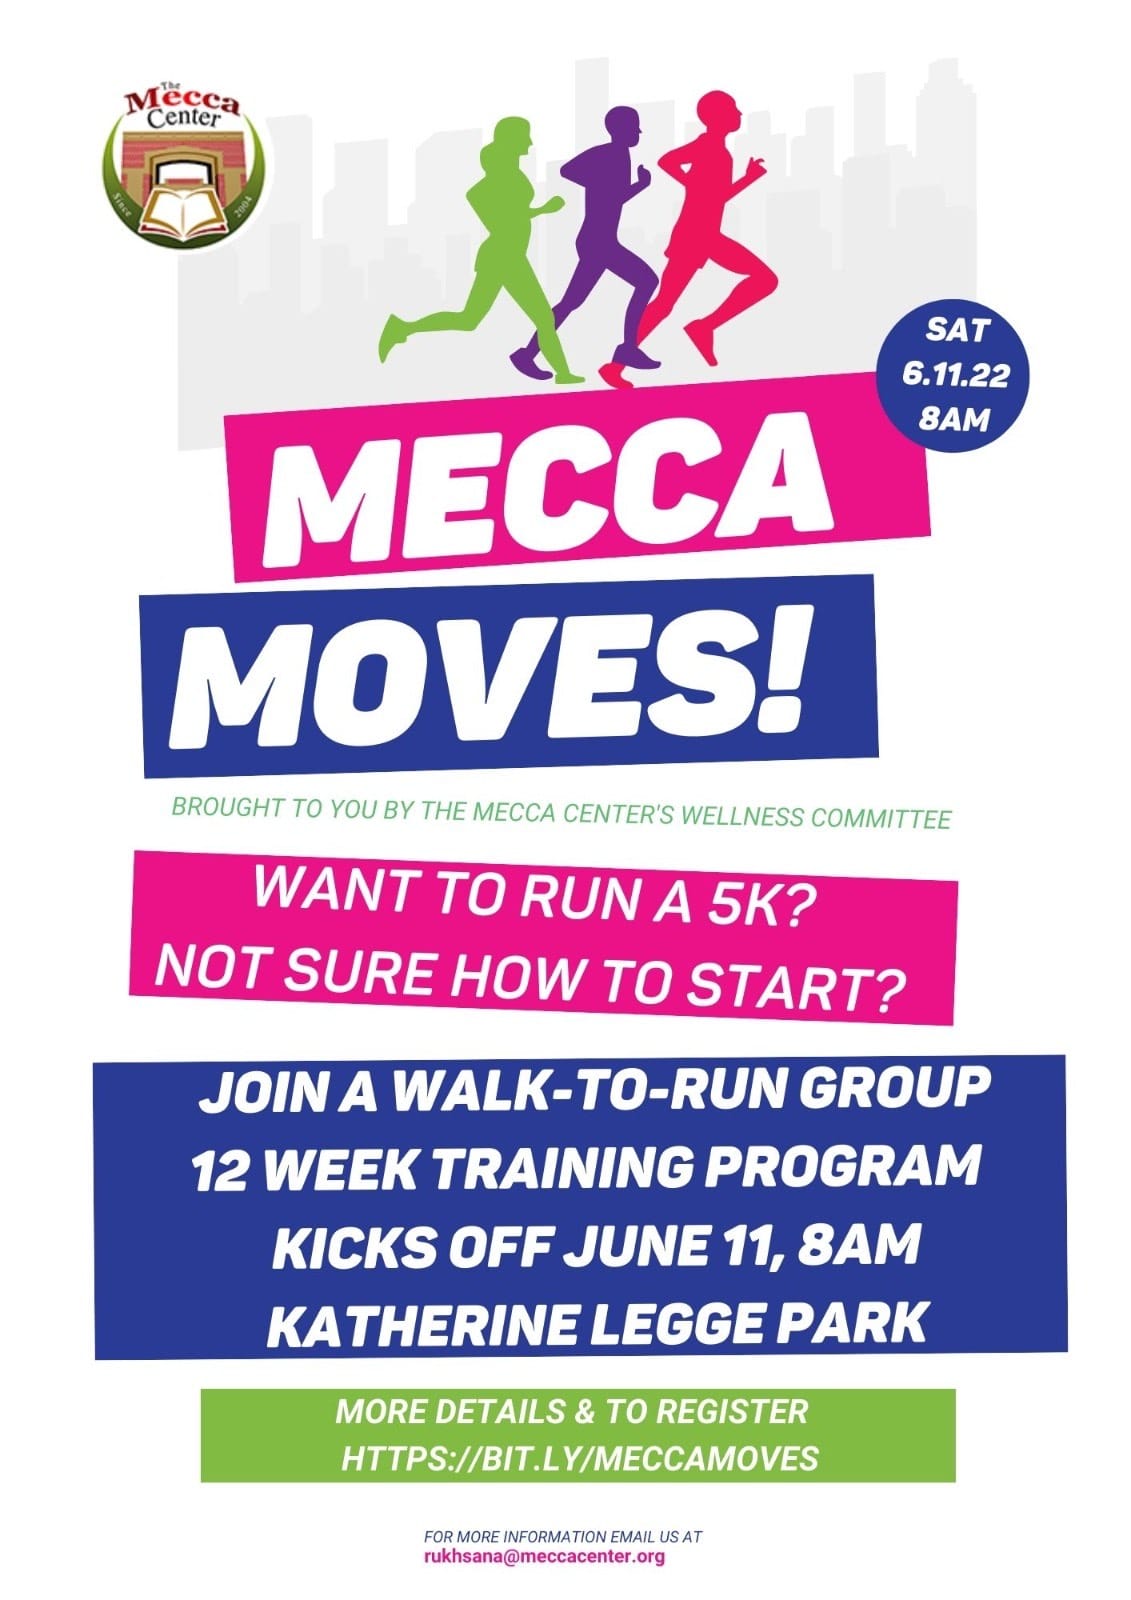 Mecca Moves: 5k Walk-to-Run Training, June 11